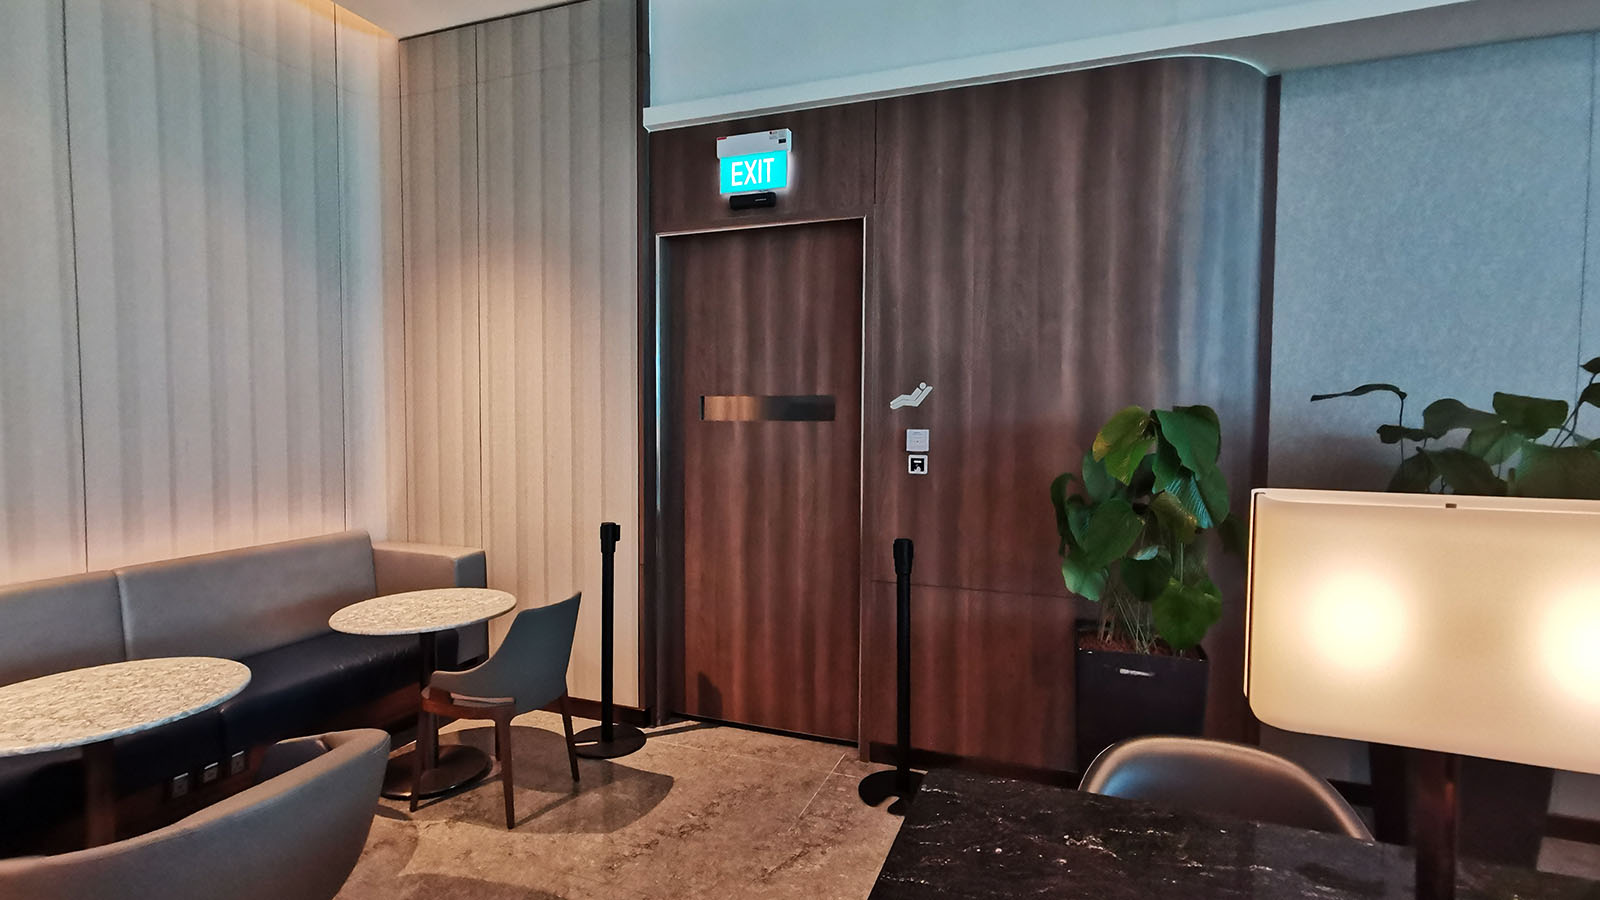 Singapore Airlines' SilverKris Business Class Lounge